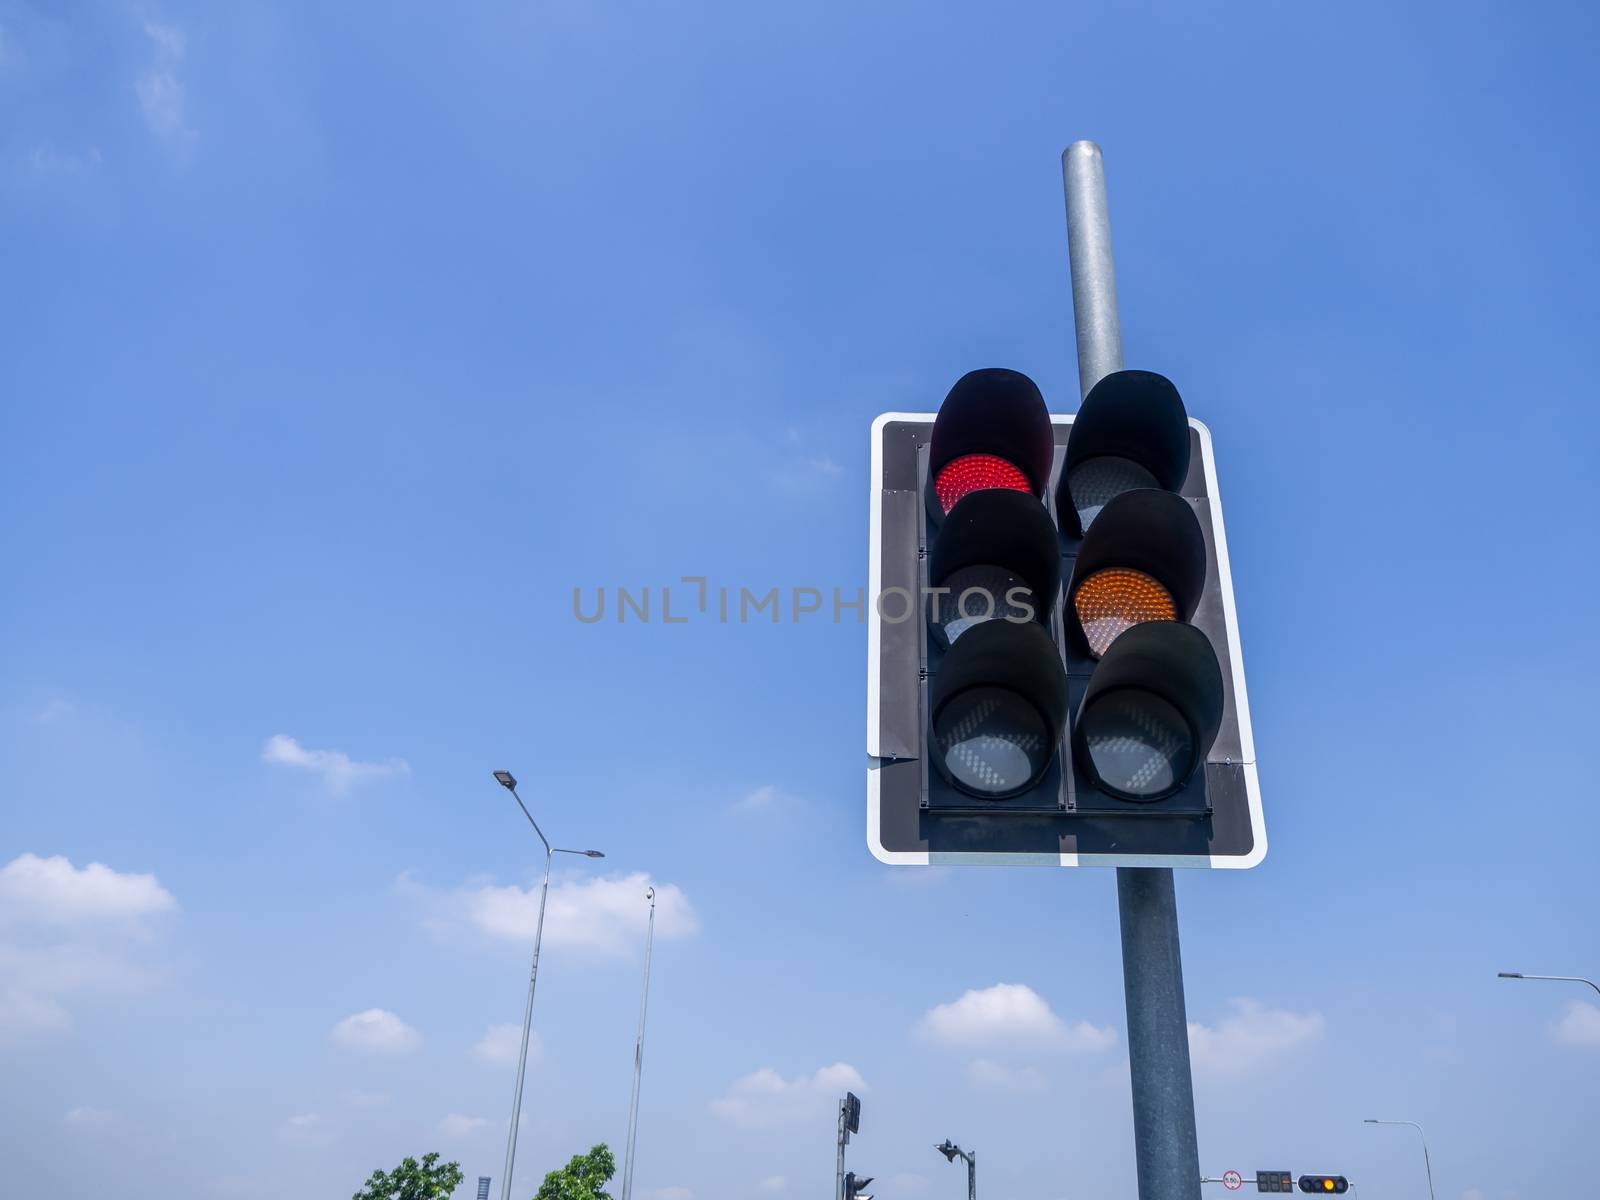 traffic lights against a vibrant blue sky by shutterbird